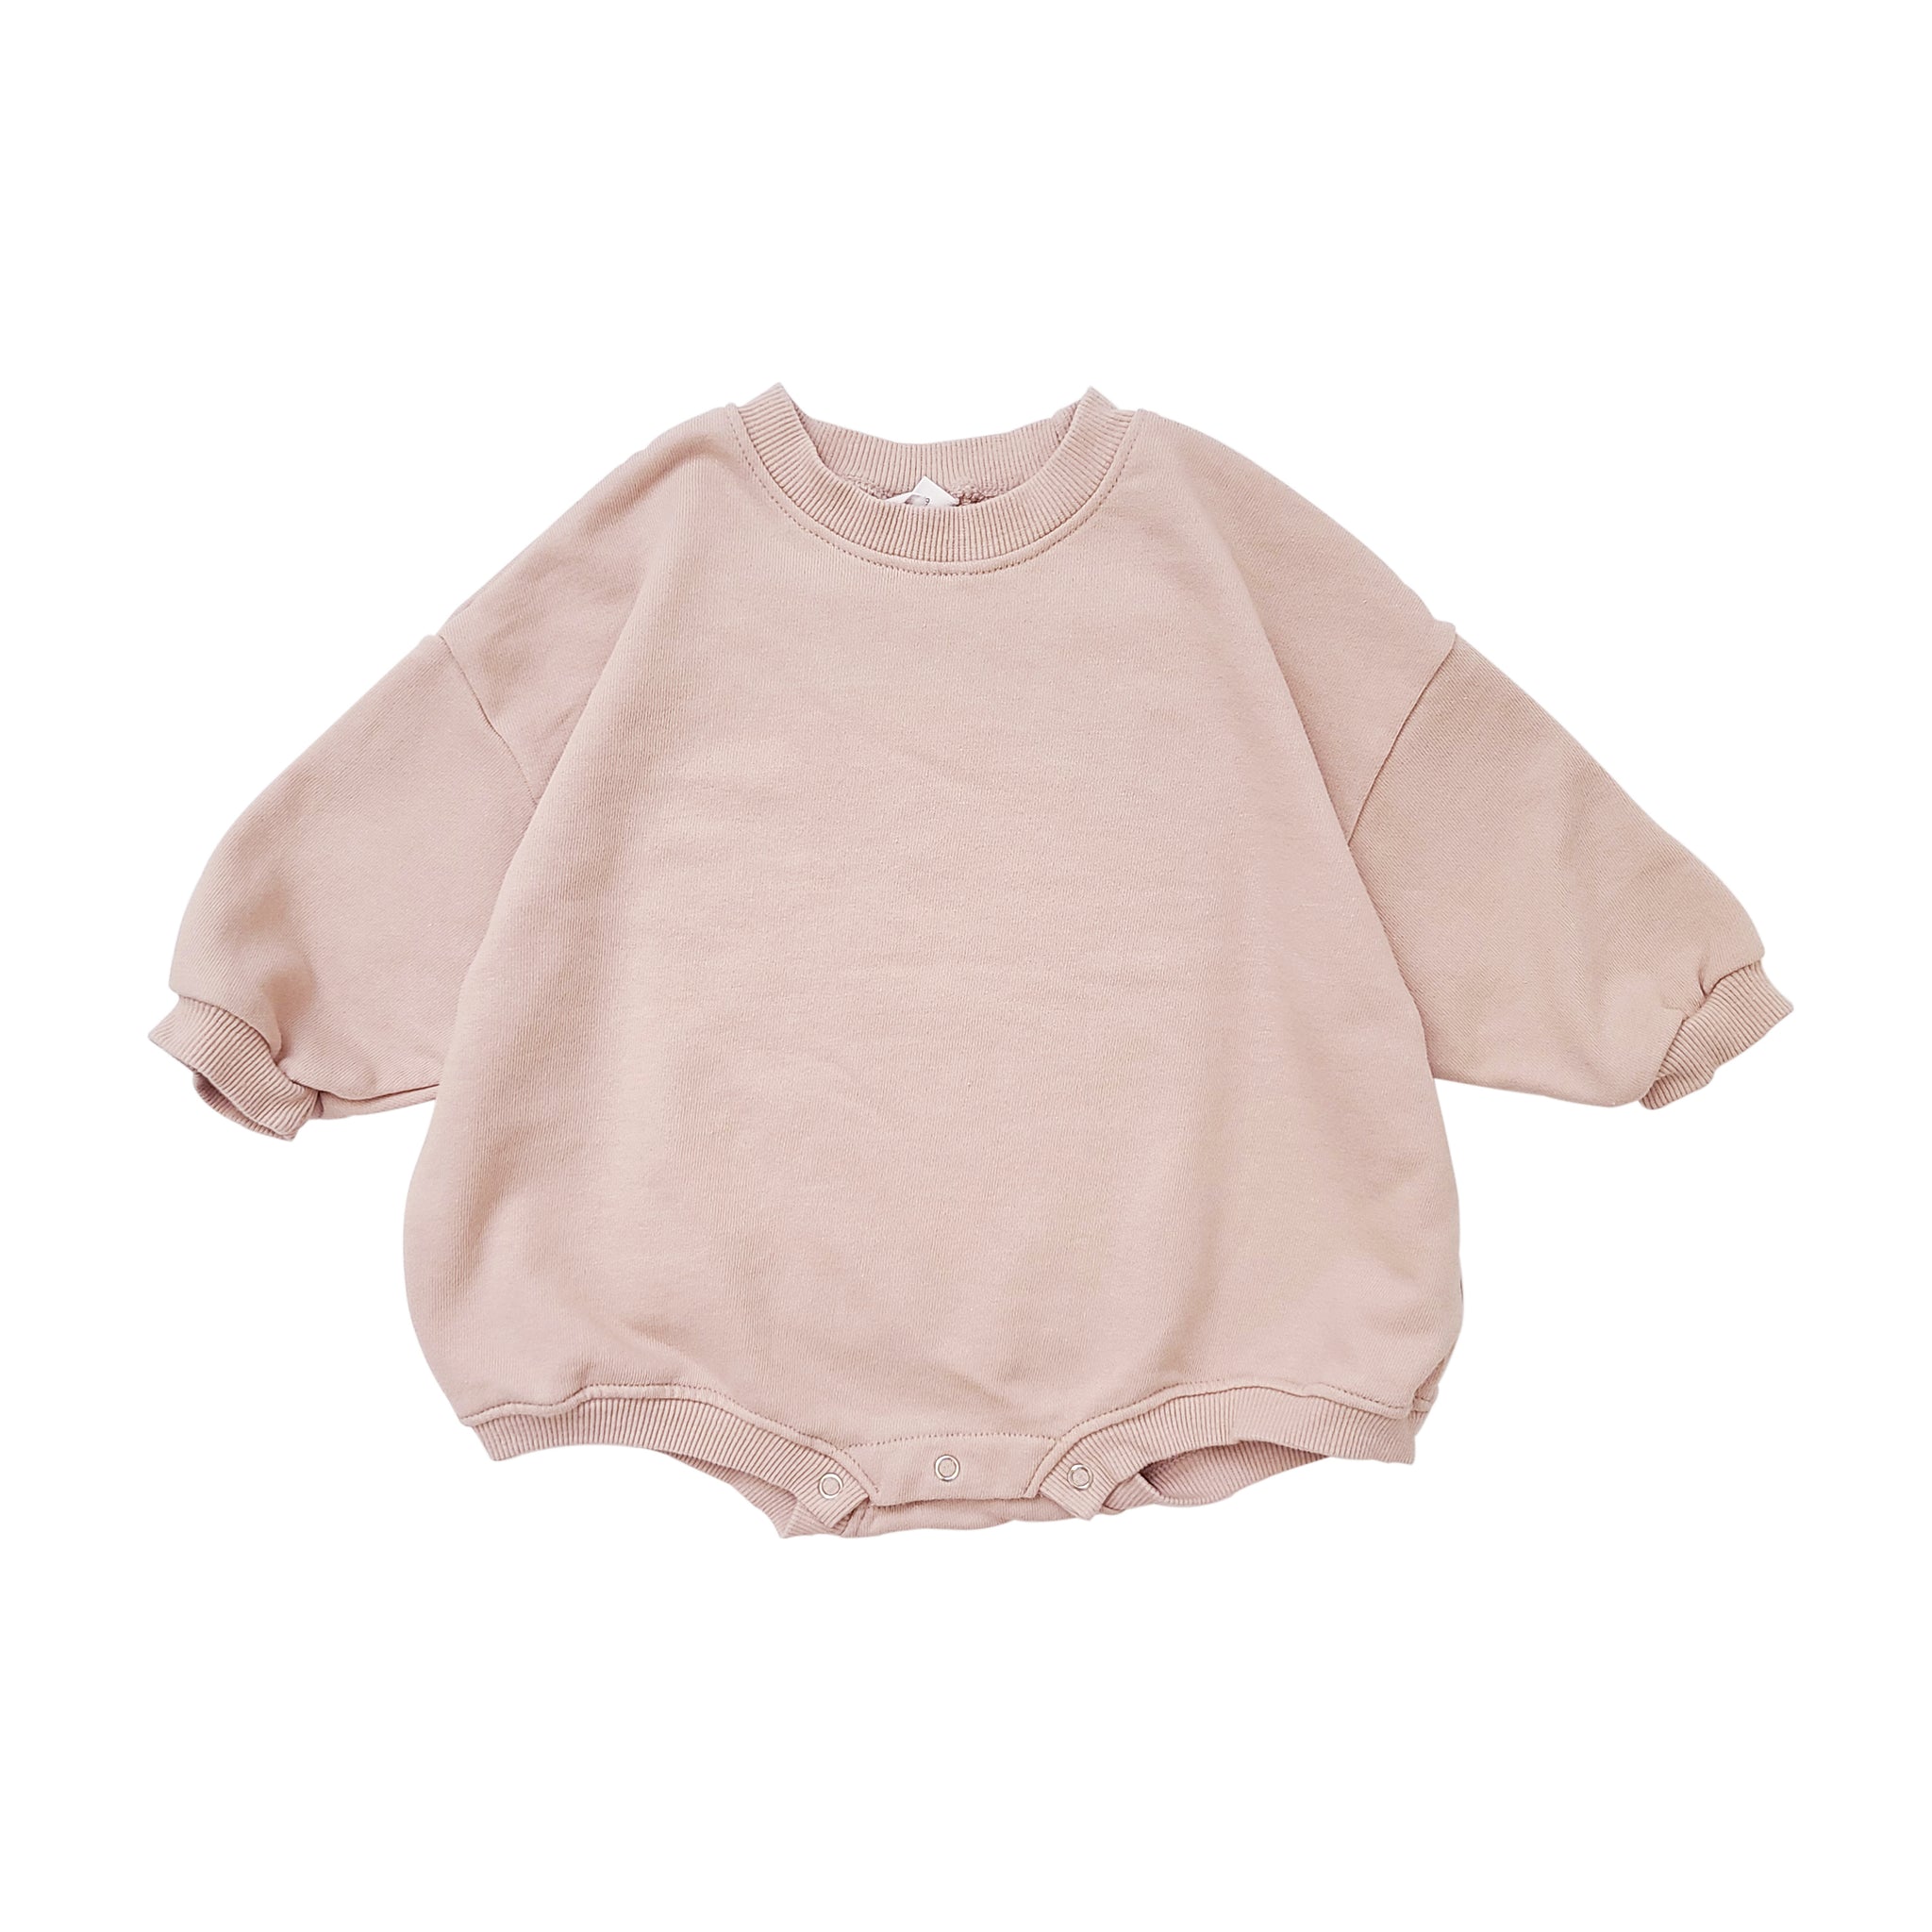 Baby Sweatshirt Romper (3-24m) - Beige Pink - AT NOON STORE